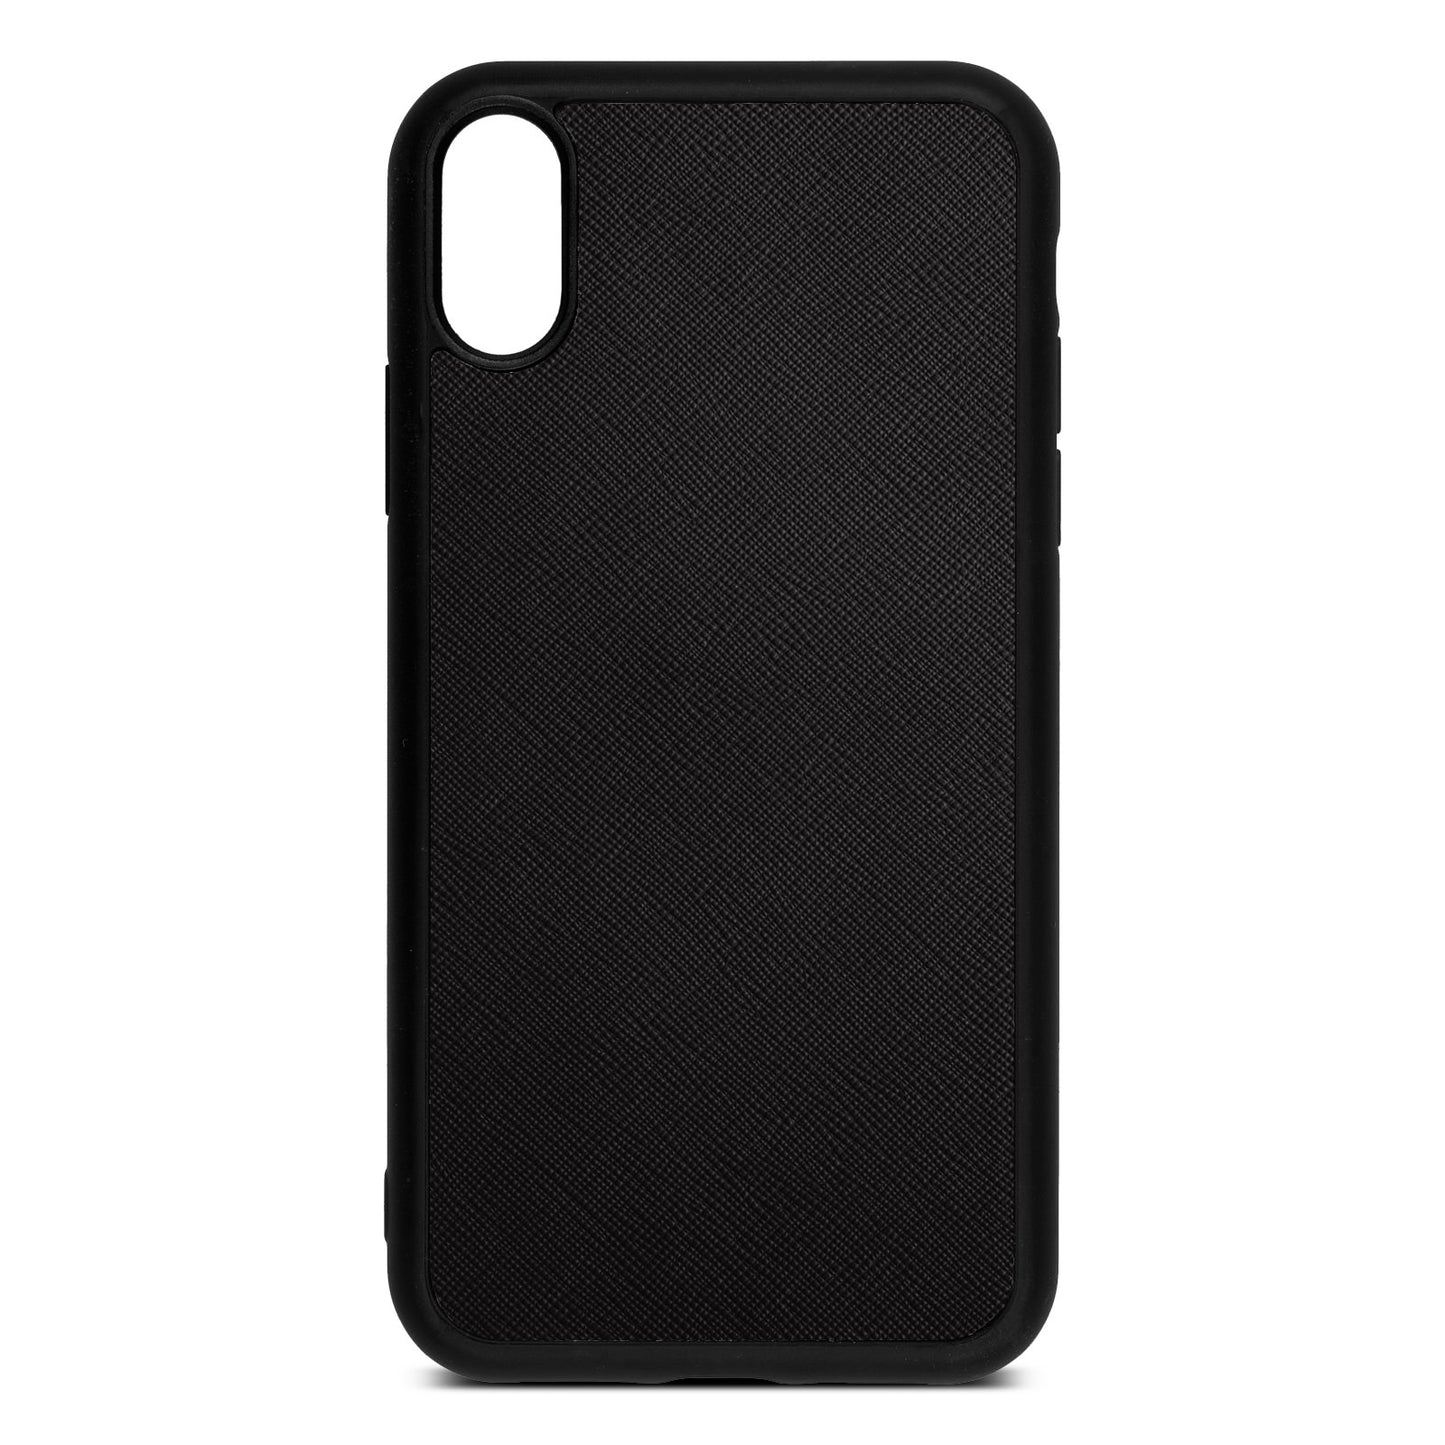 Blank iPhone XR Drop Shadow Black Leather Case